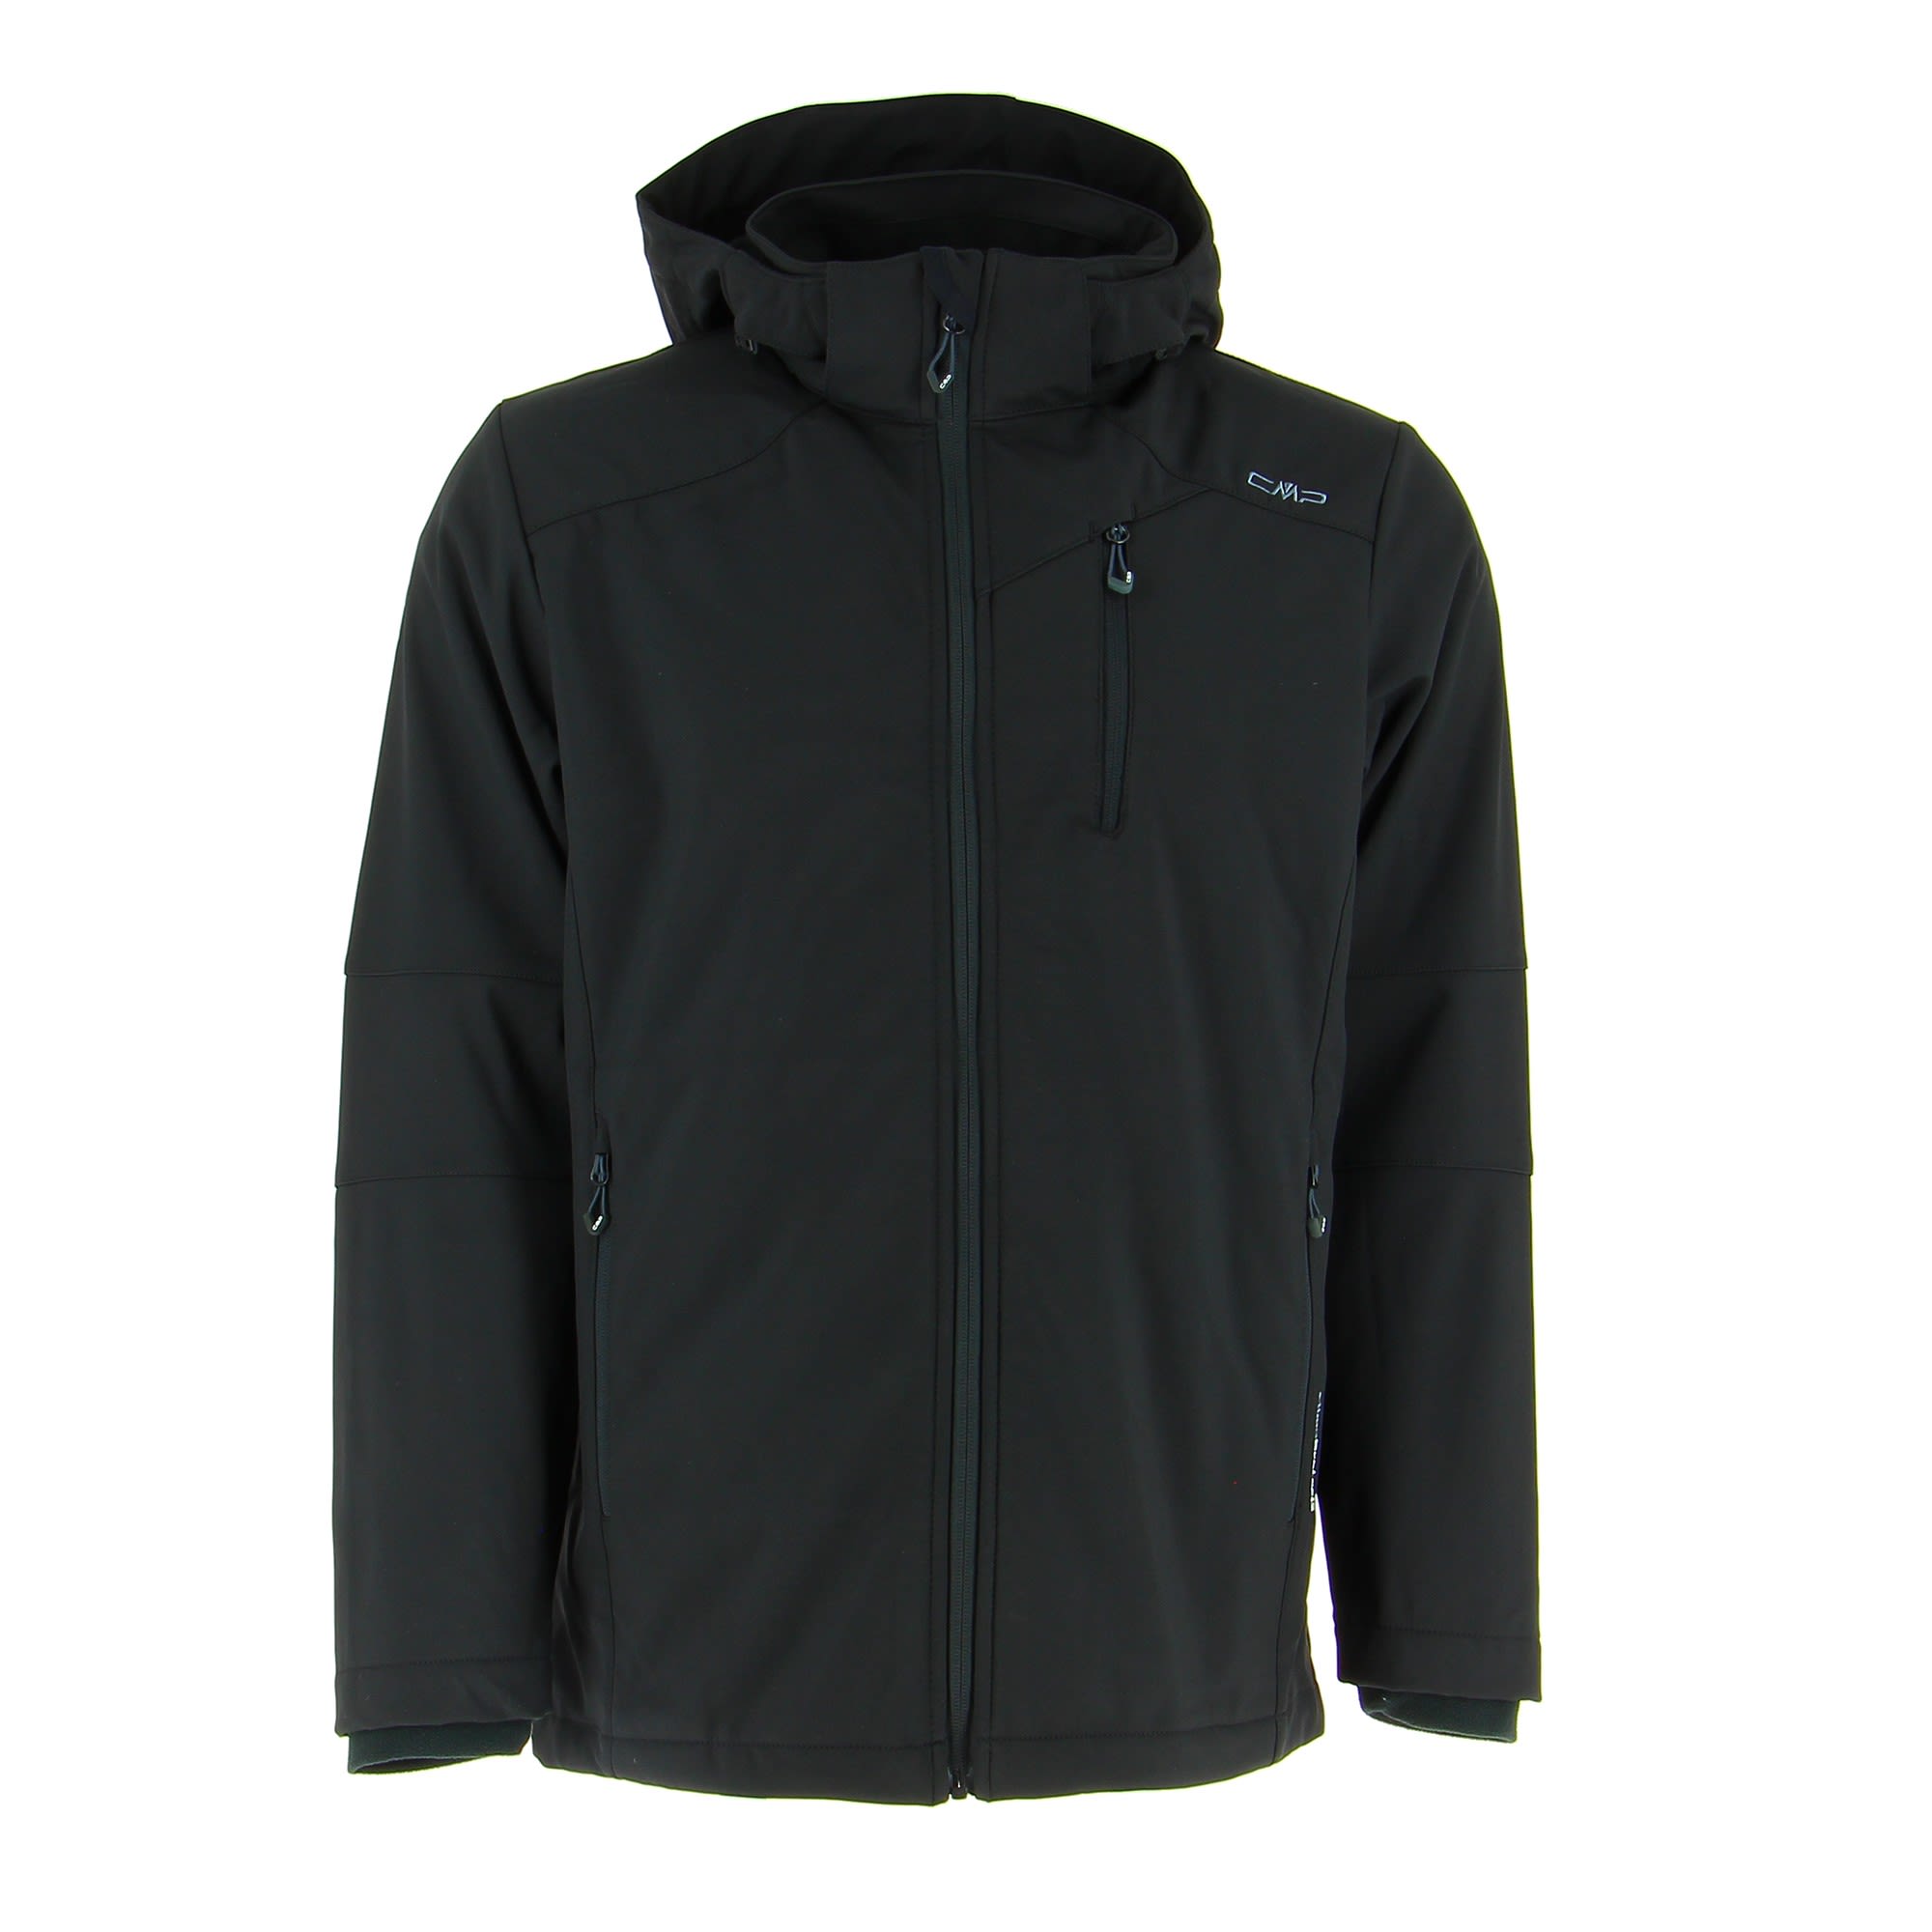 CMP Jacket Zip Hood Softshell Comfort FIt Long Male Softshelljacken- Grsse 58 - Farbe Nero unter CMP